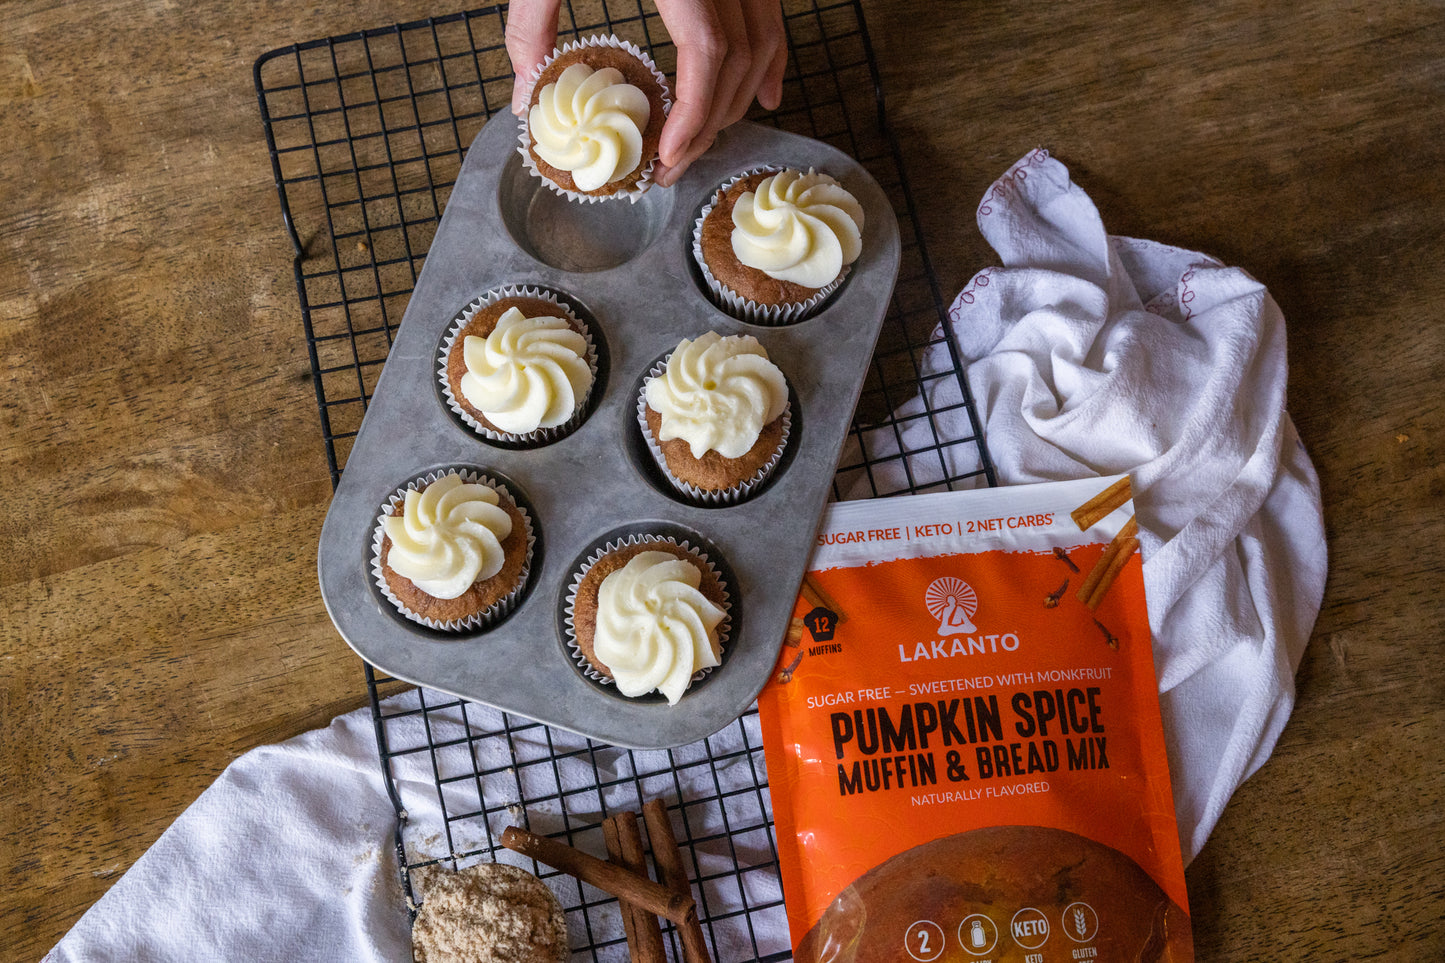 Sugar-Free Pumpkin Spice Muffin & Bread Mix